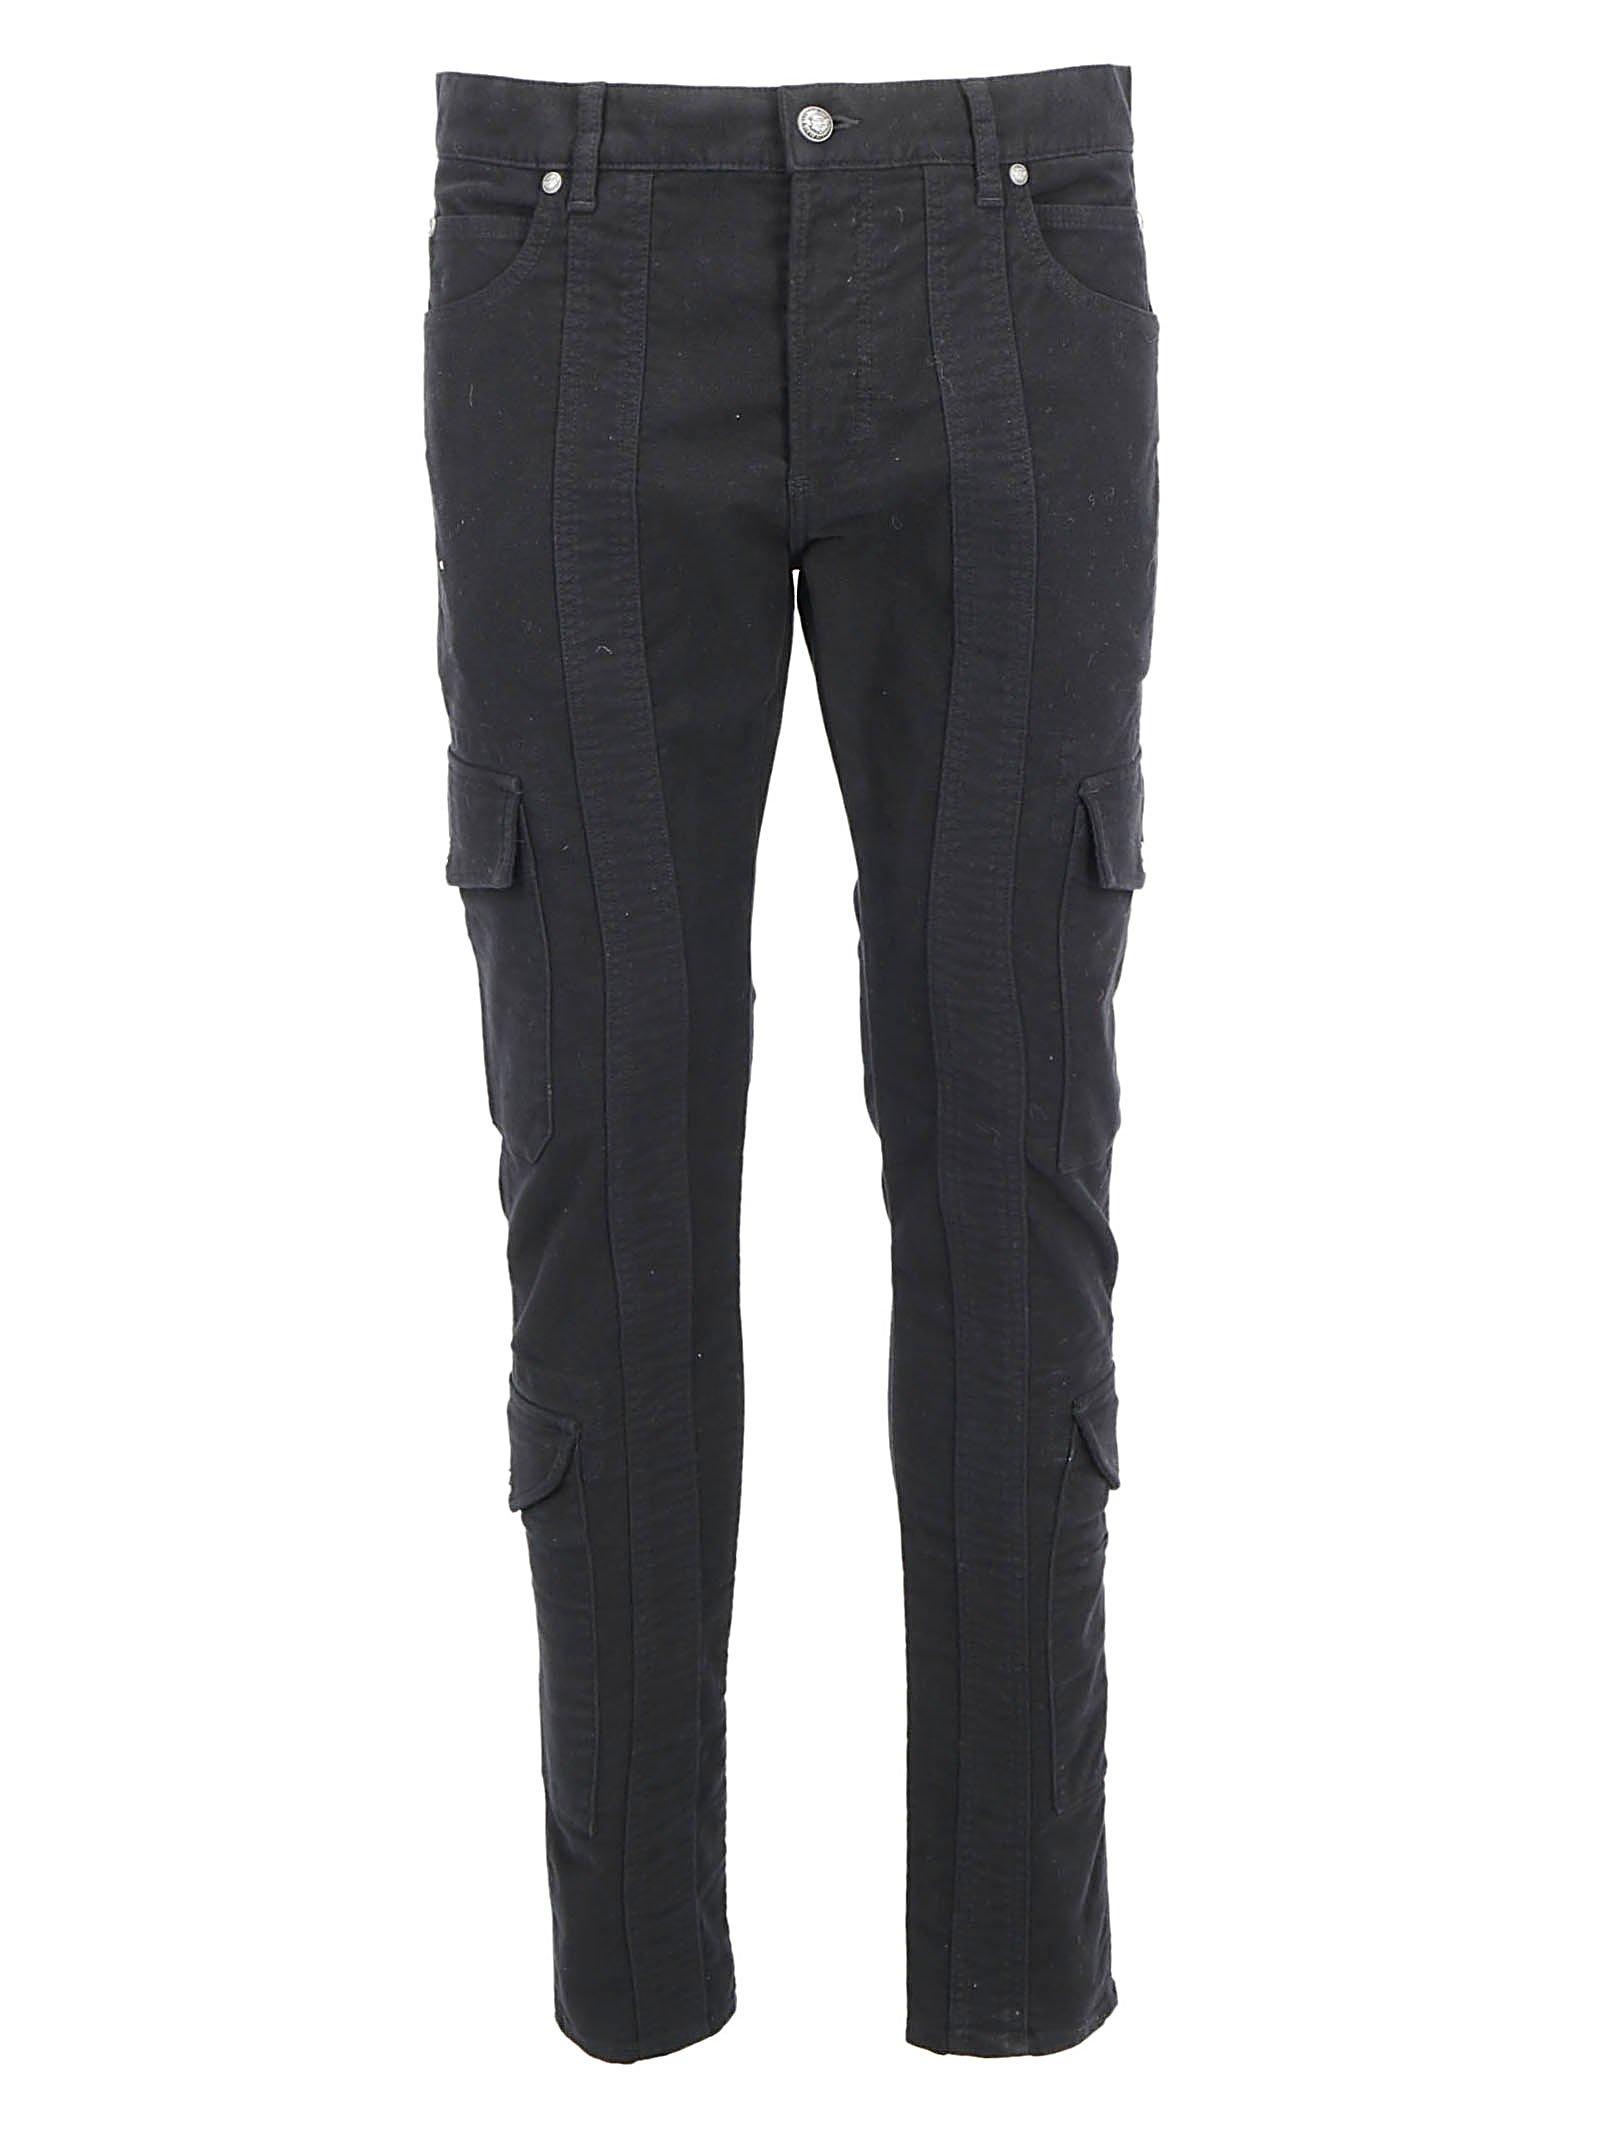 Balmain Cotton Panelled Cargo Pants in Black for Men - Lyst